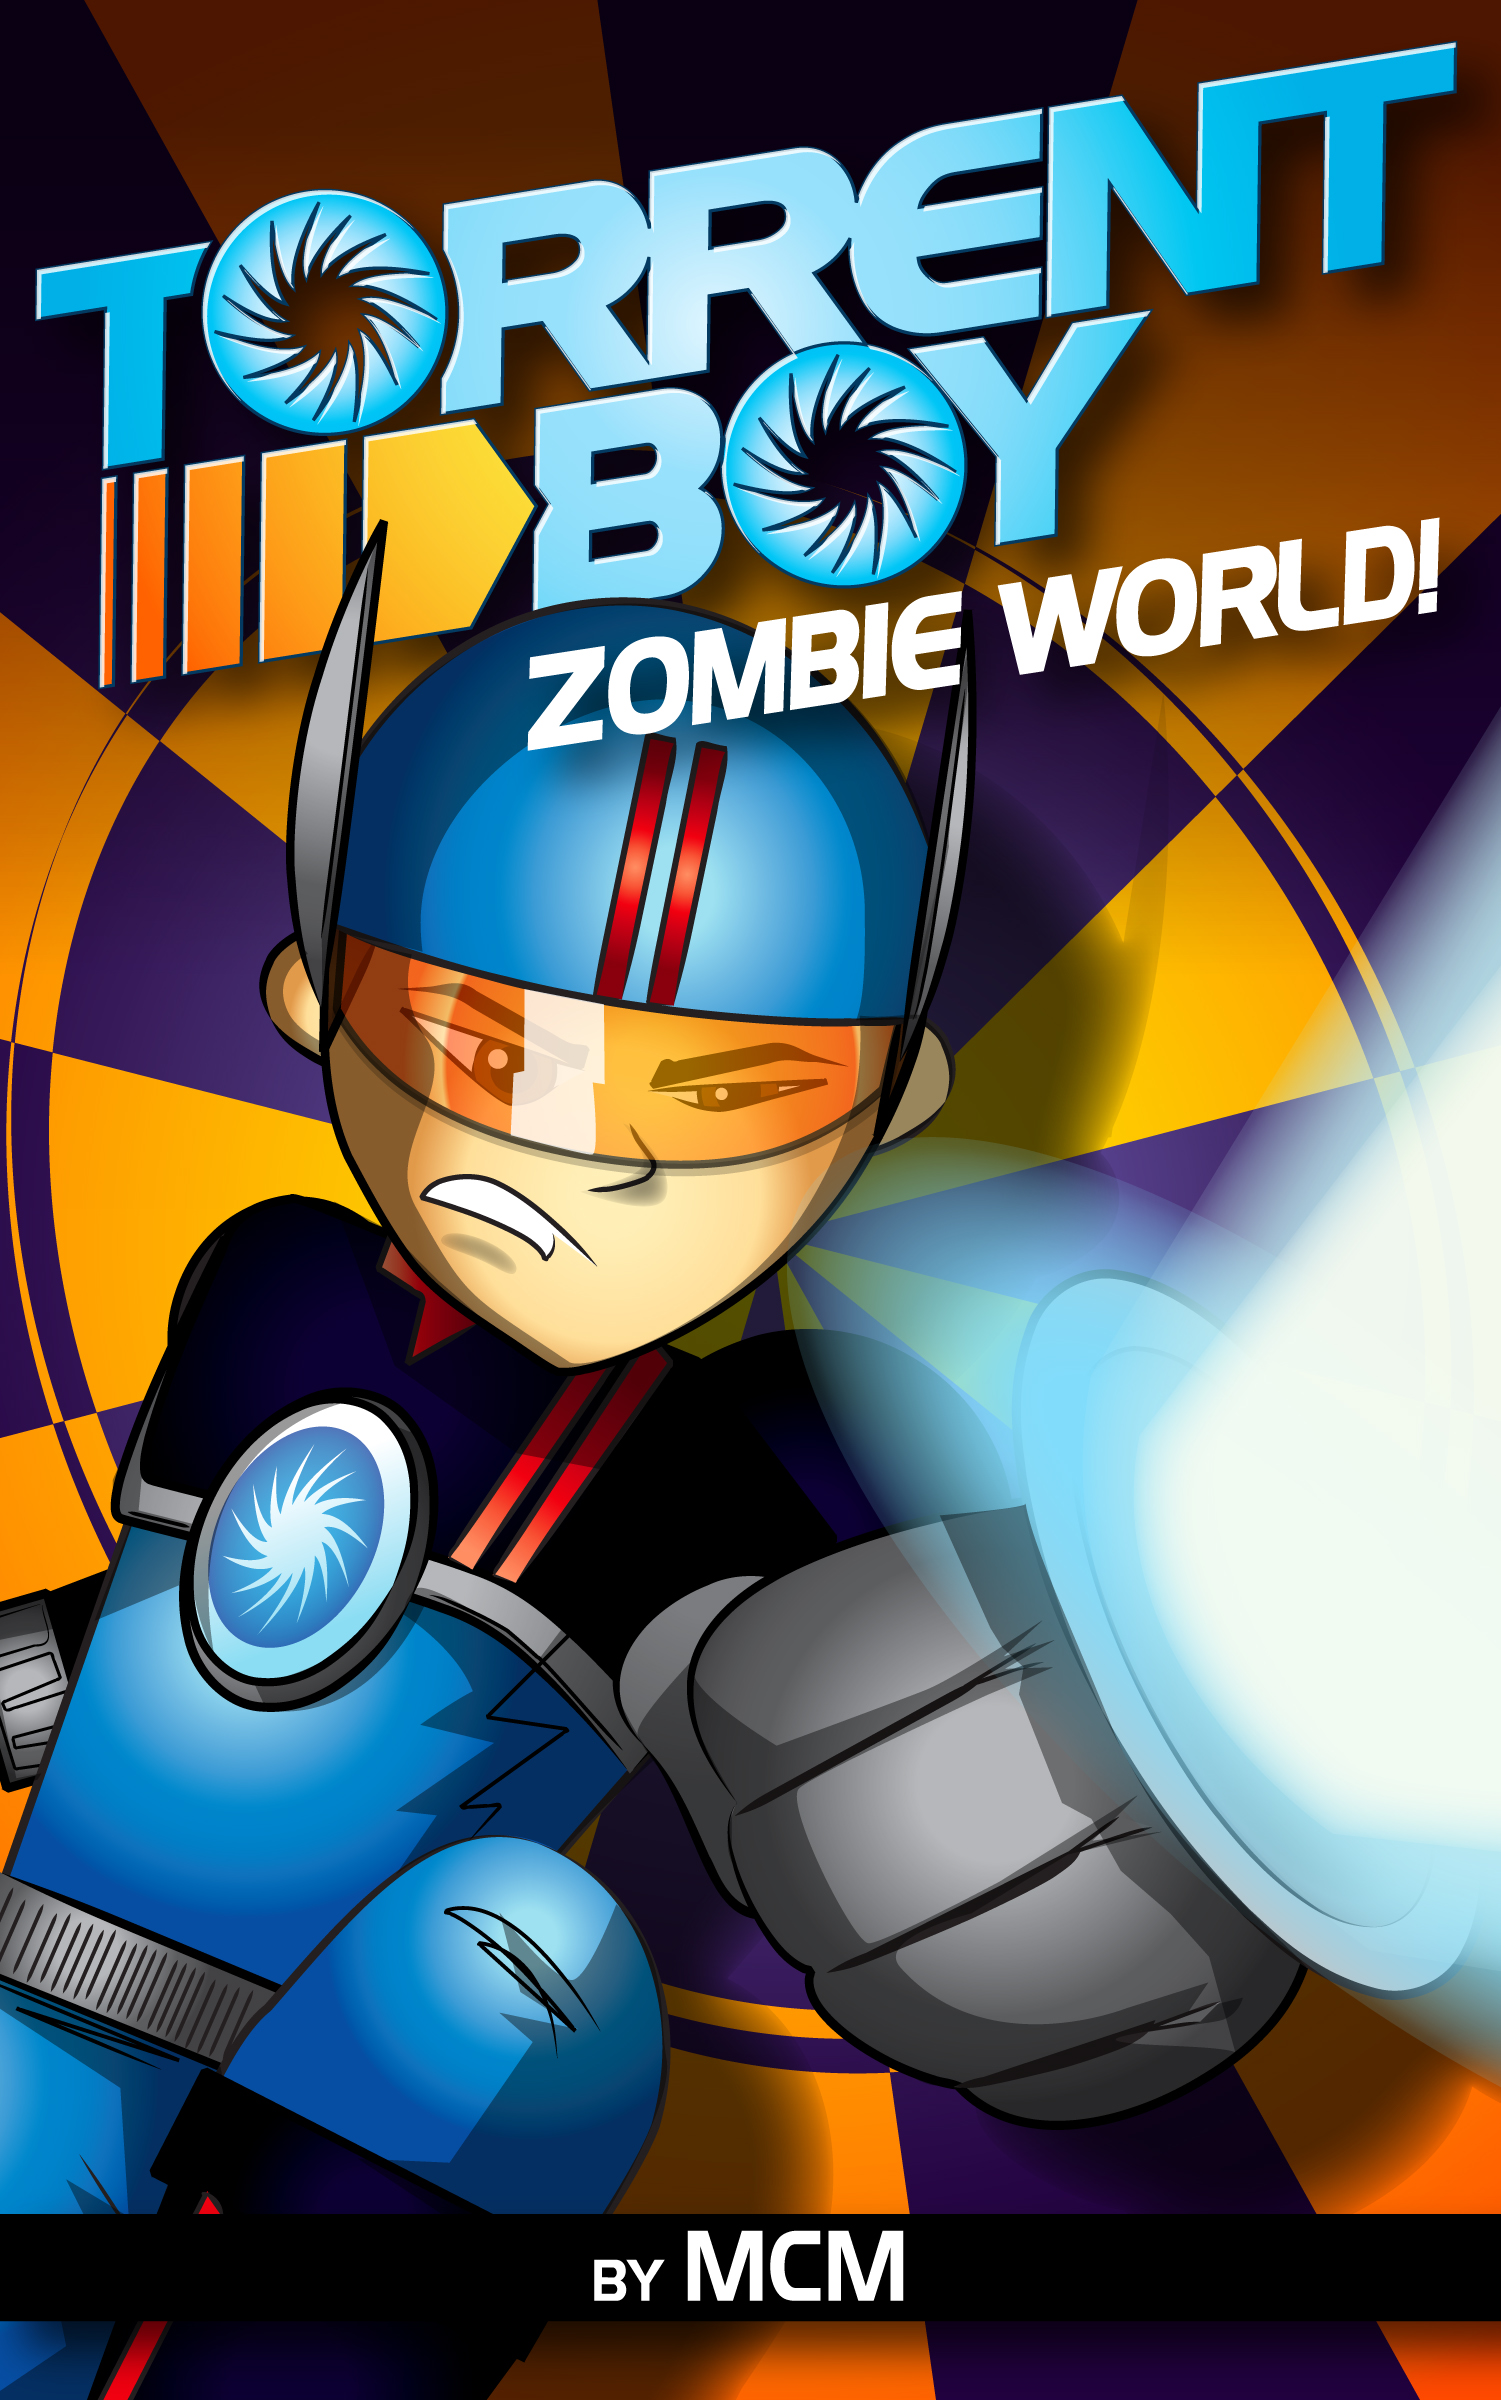 TorrentBoy: Zombie World! (9 to go!)